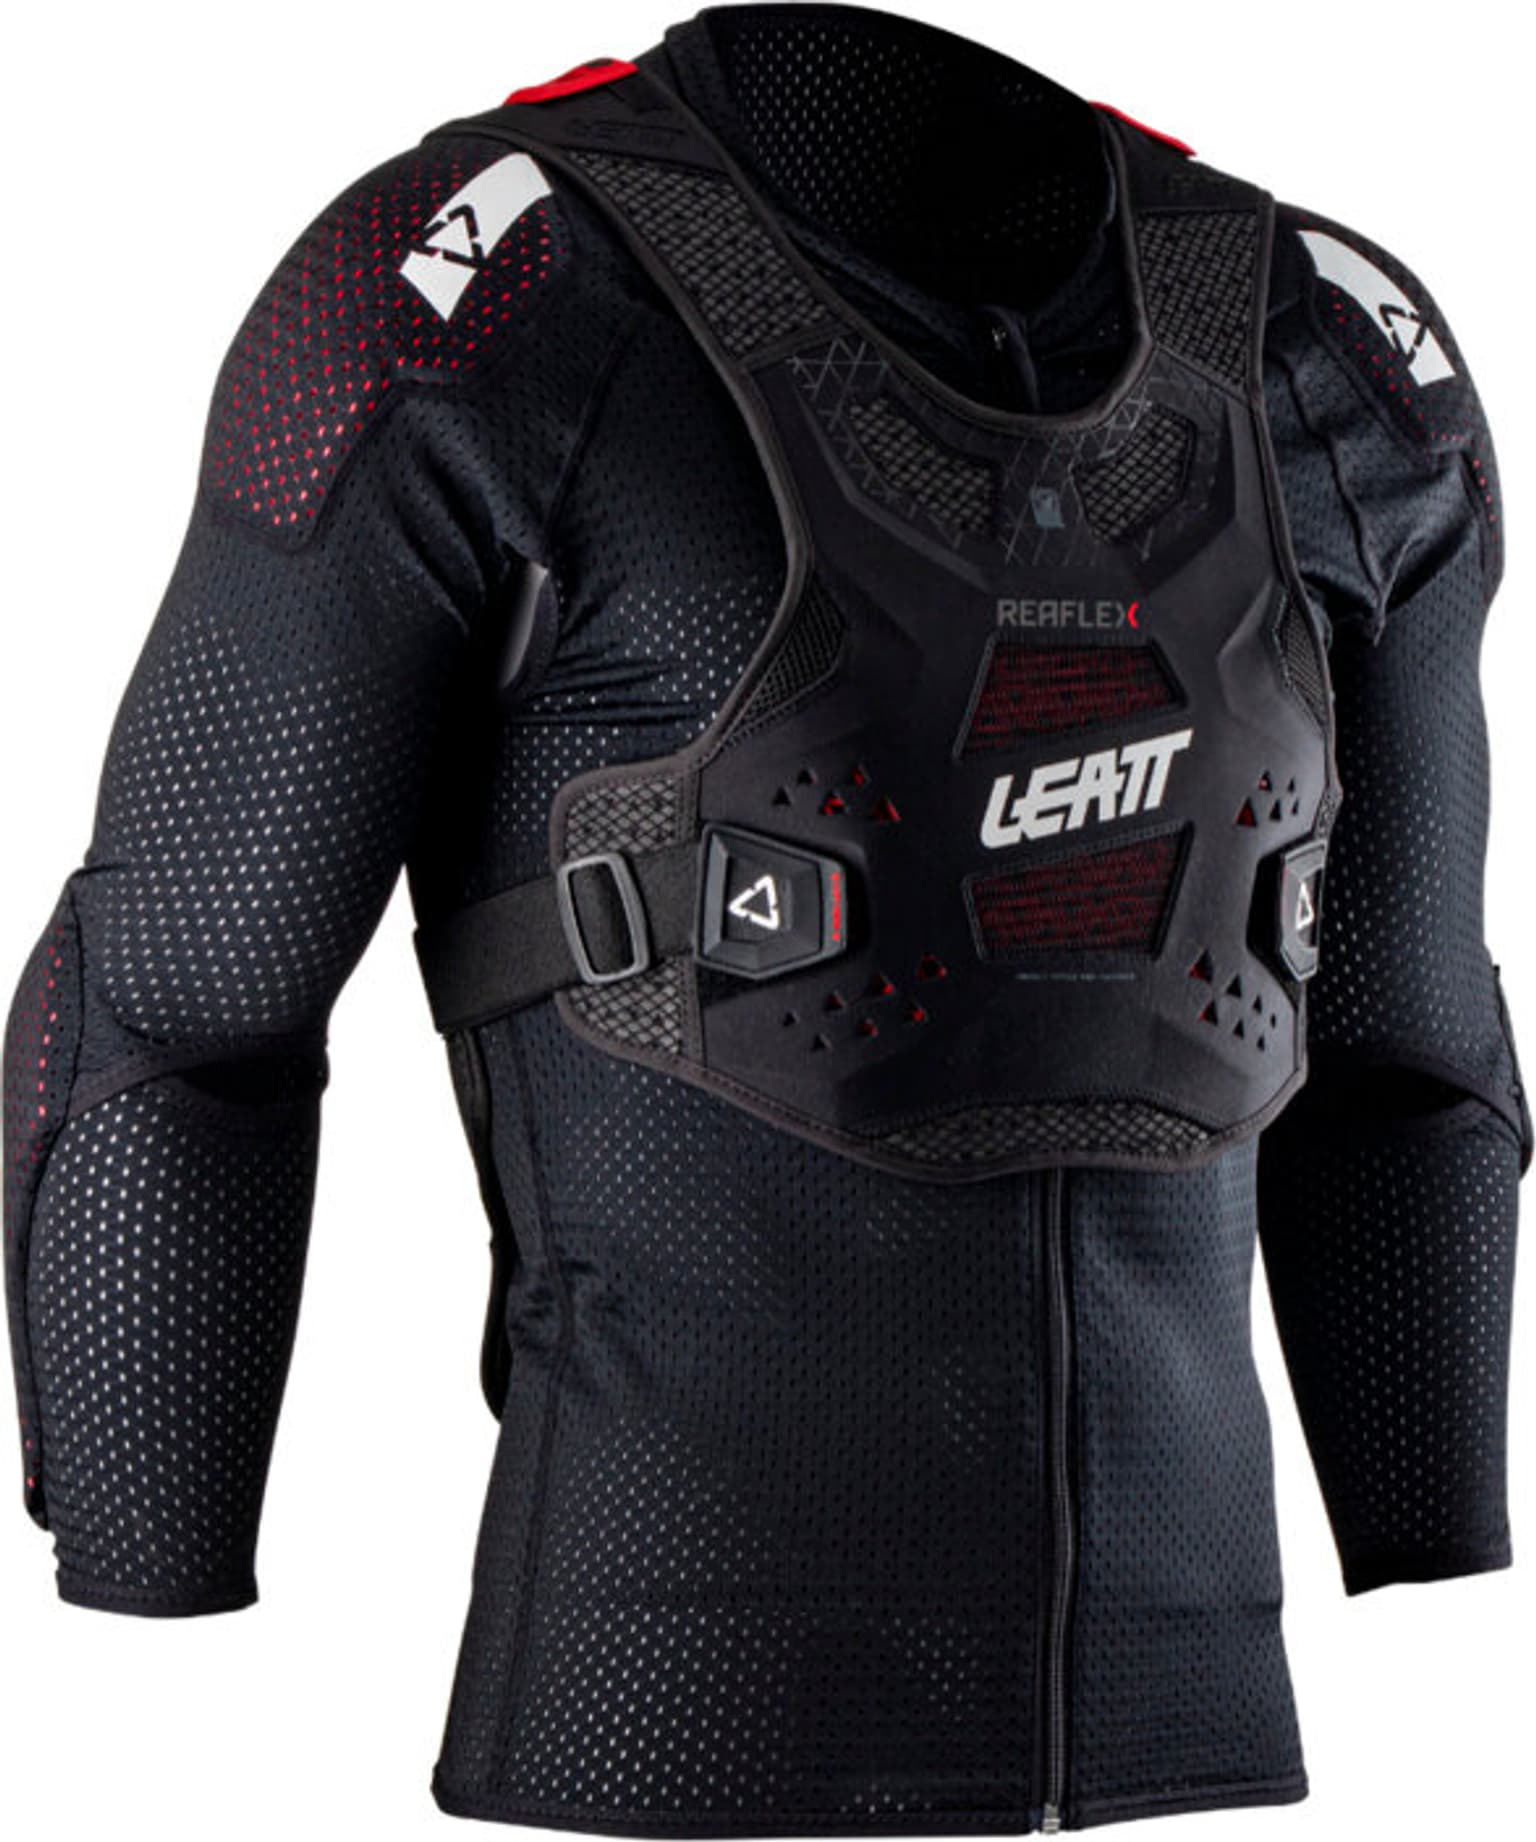 Leatt Leatt ReaFlex Body Protector Protektoren nero 1